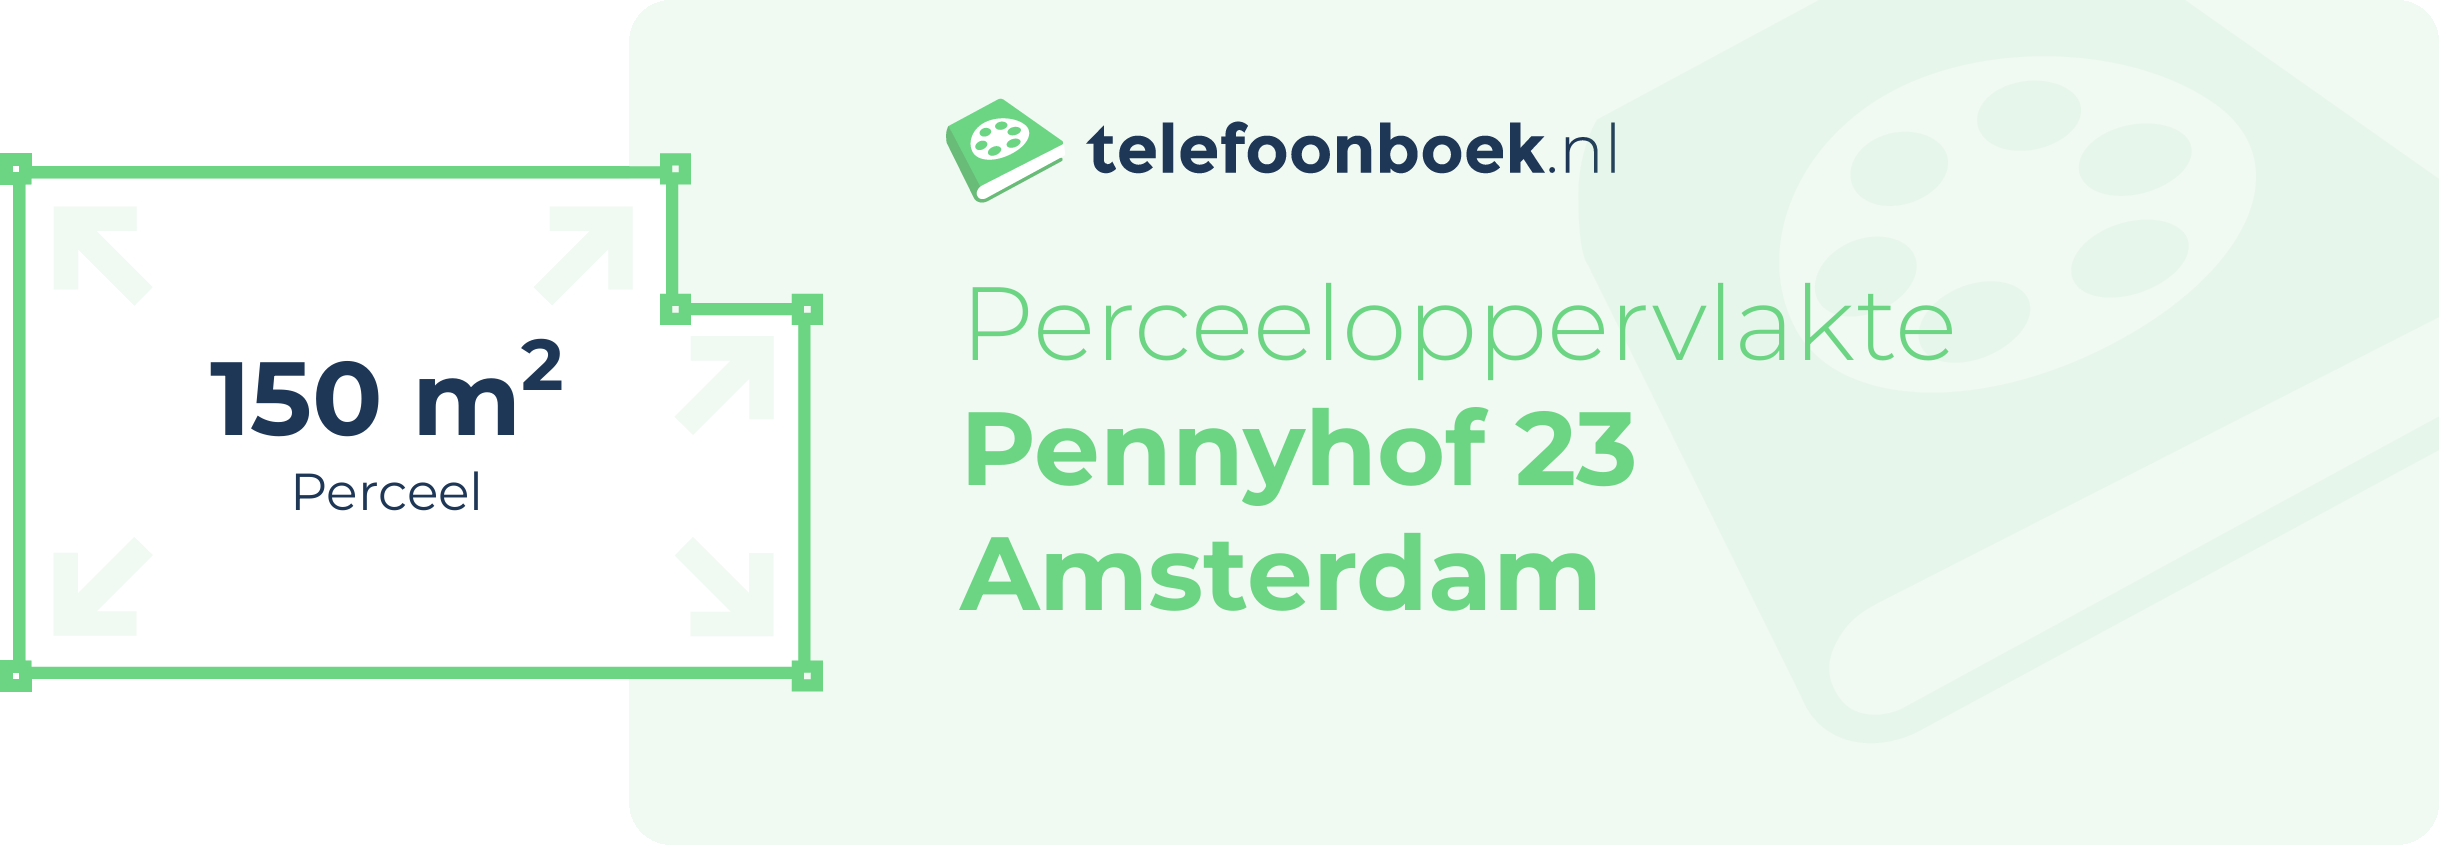 Perceeloppervlakte Pennyhof 23 Amsterdam